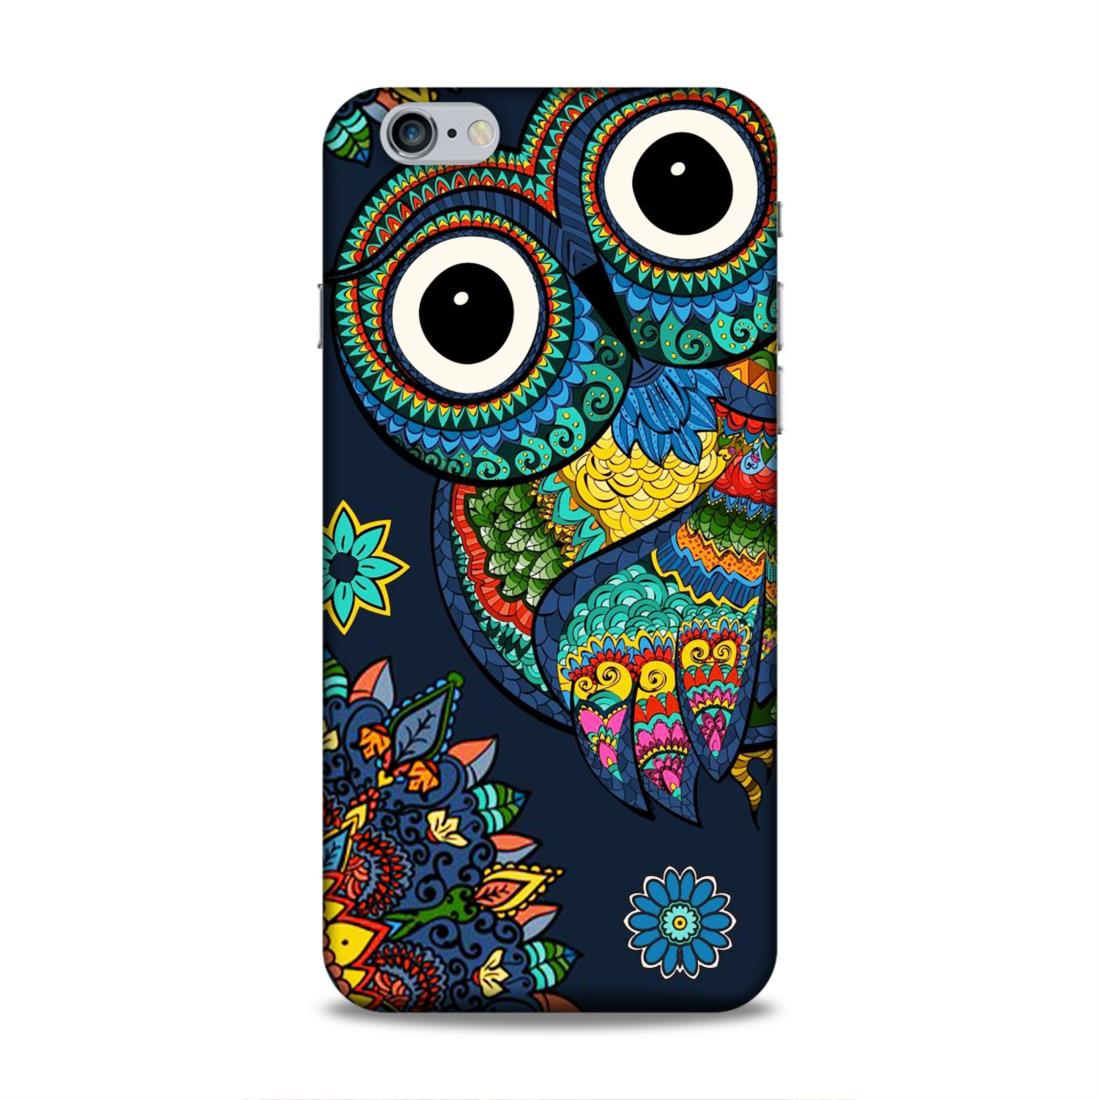 Owl and Mandala Flower Hard Back Case For Apple iPhone 6 Plus / 6s Plus